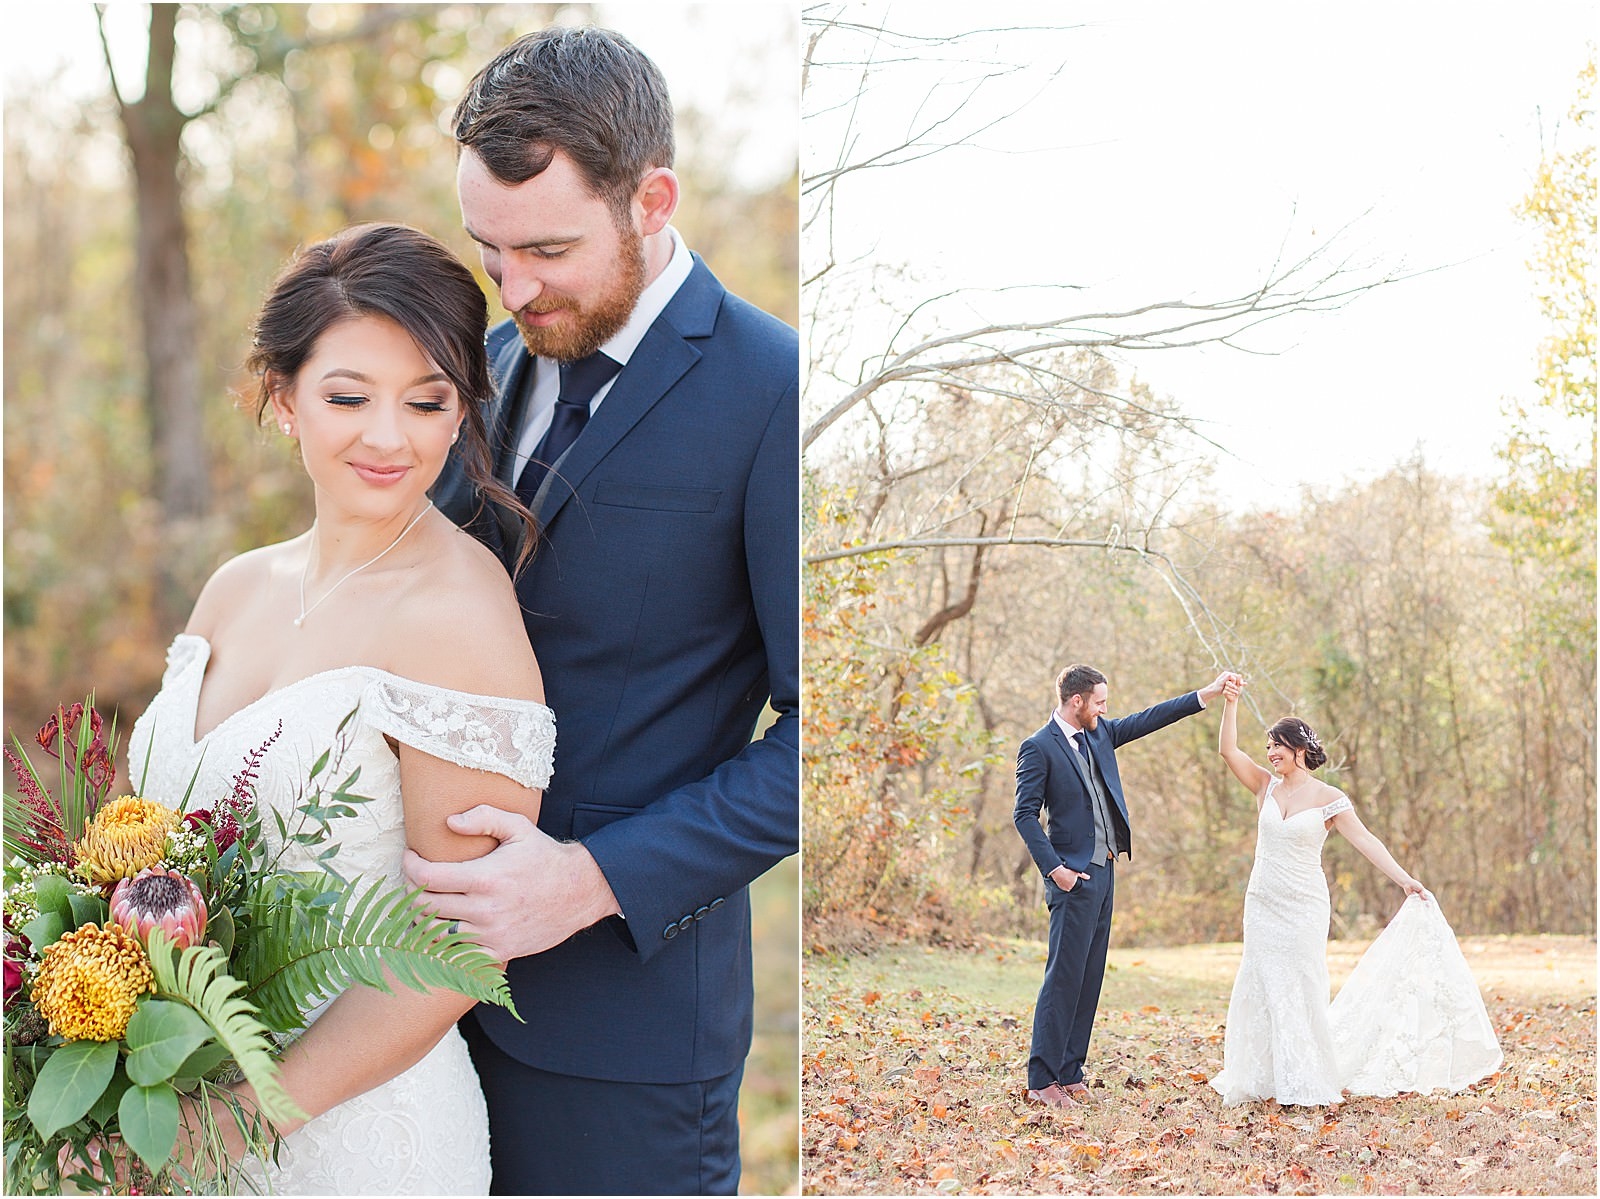 Walker and Alyssa's intimate fall wedding in Southern Indiana. | Wedding Photography | The Corner House Wedding | Southern Indiana Wedding | #fallwedding #intimatewedding | 043.jpg